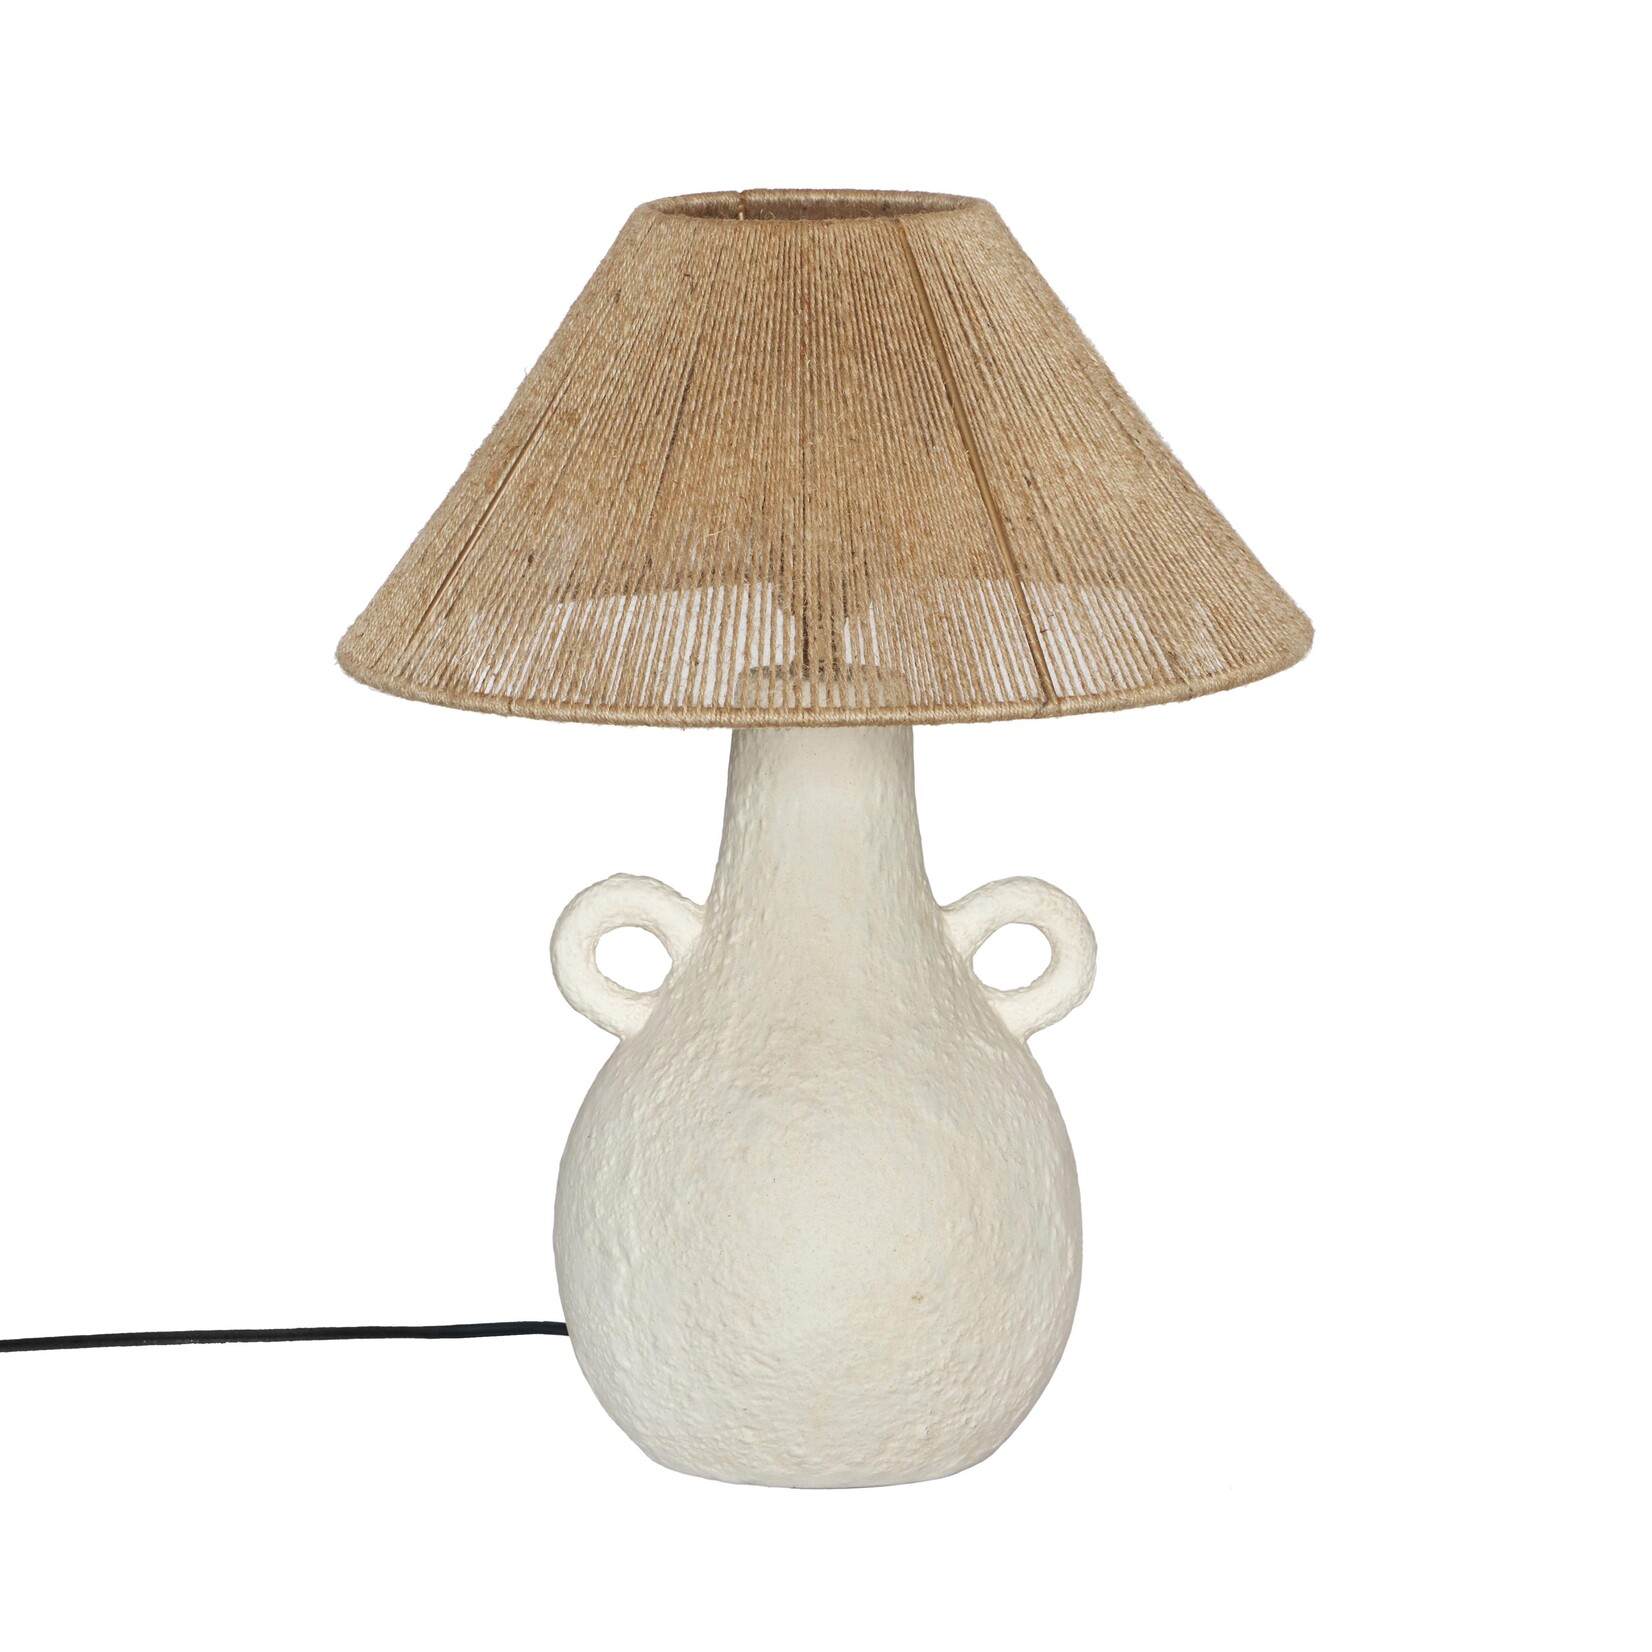 Tov LITA NATURAL & WHITE CERAMIC TABLE LAMP